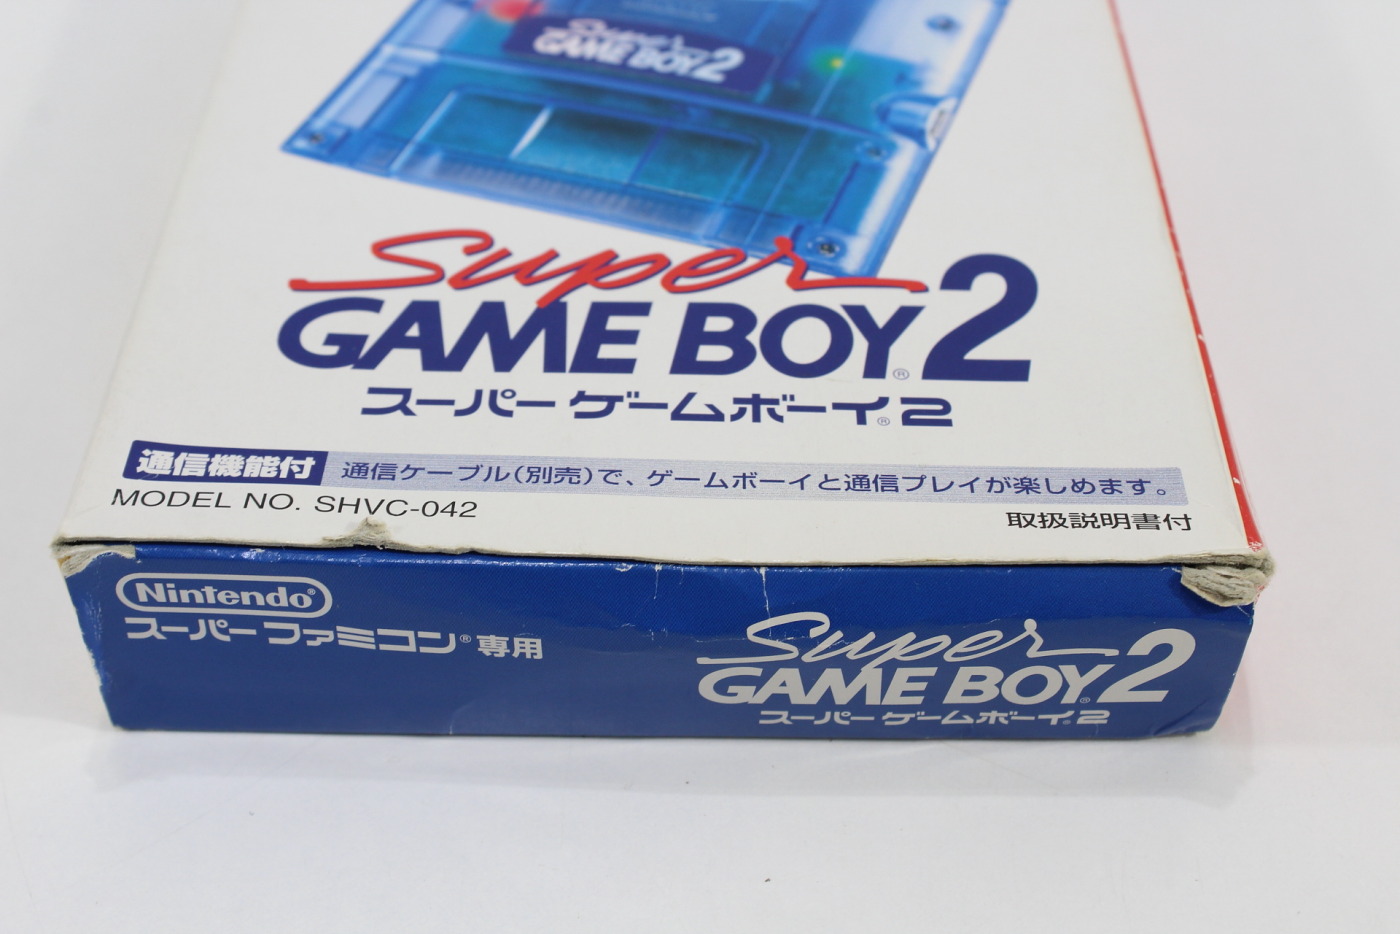 Super Gameboy 2 Boxed SFC (B)